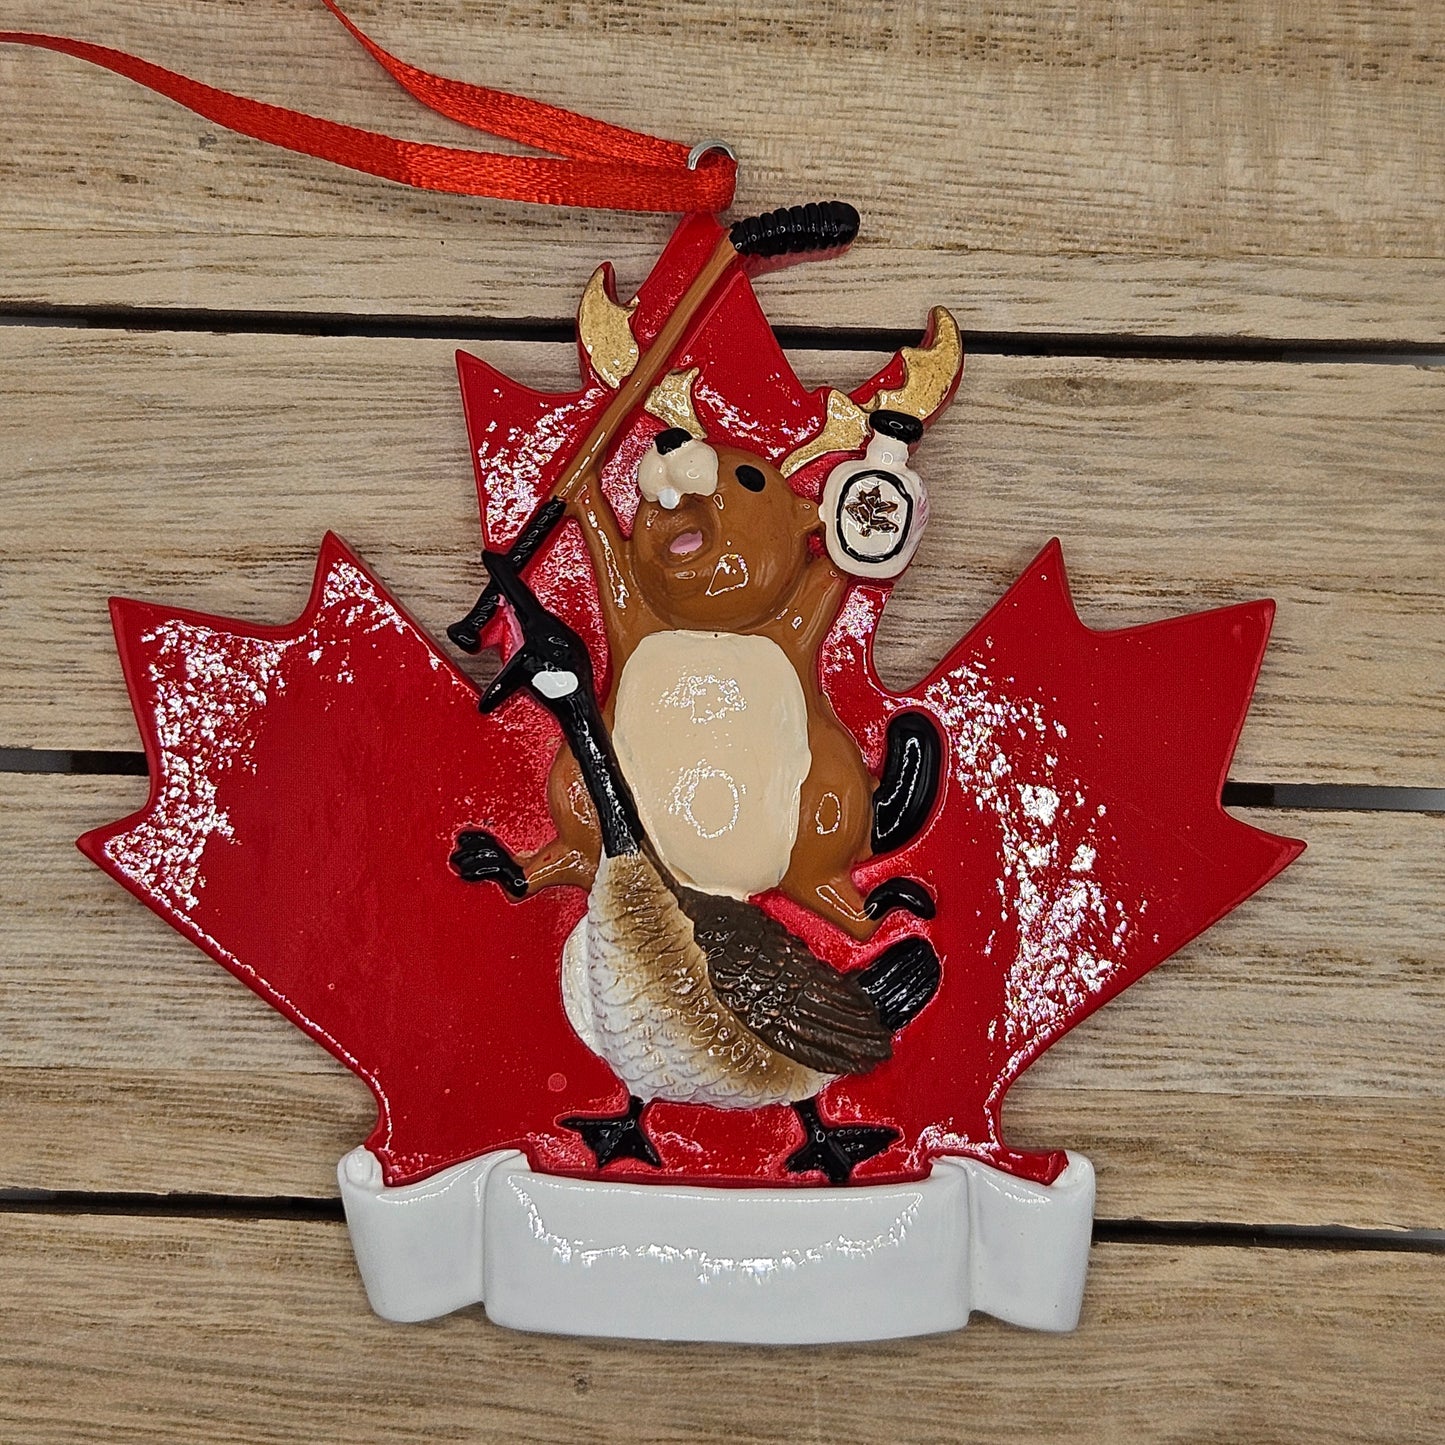 Resin Christmas Ornament: Canada